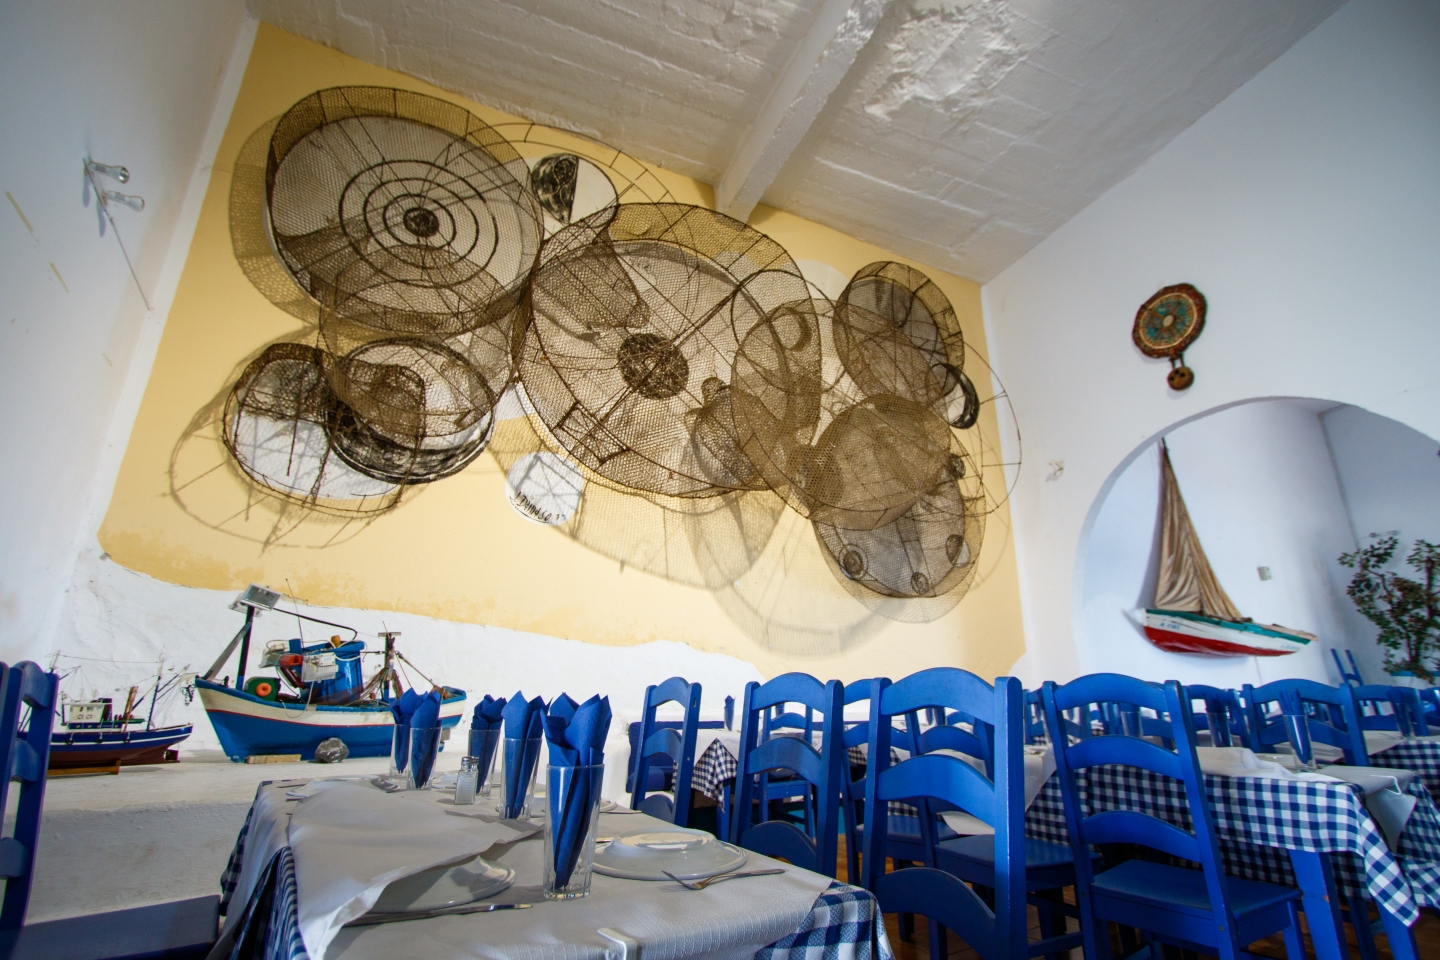 Pepe Dámaso artwork inside Las Nasas restaurant